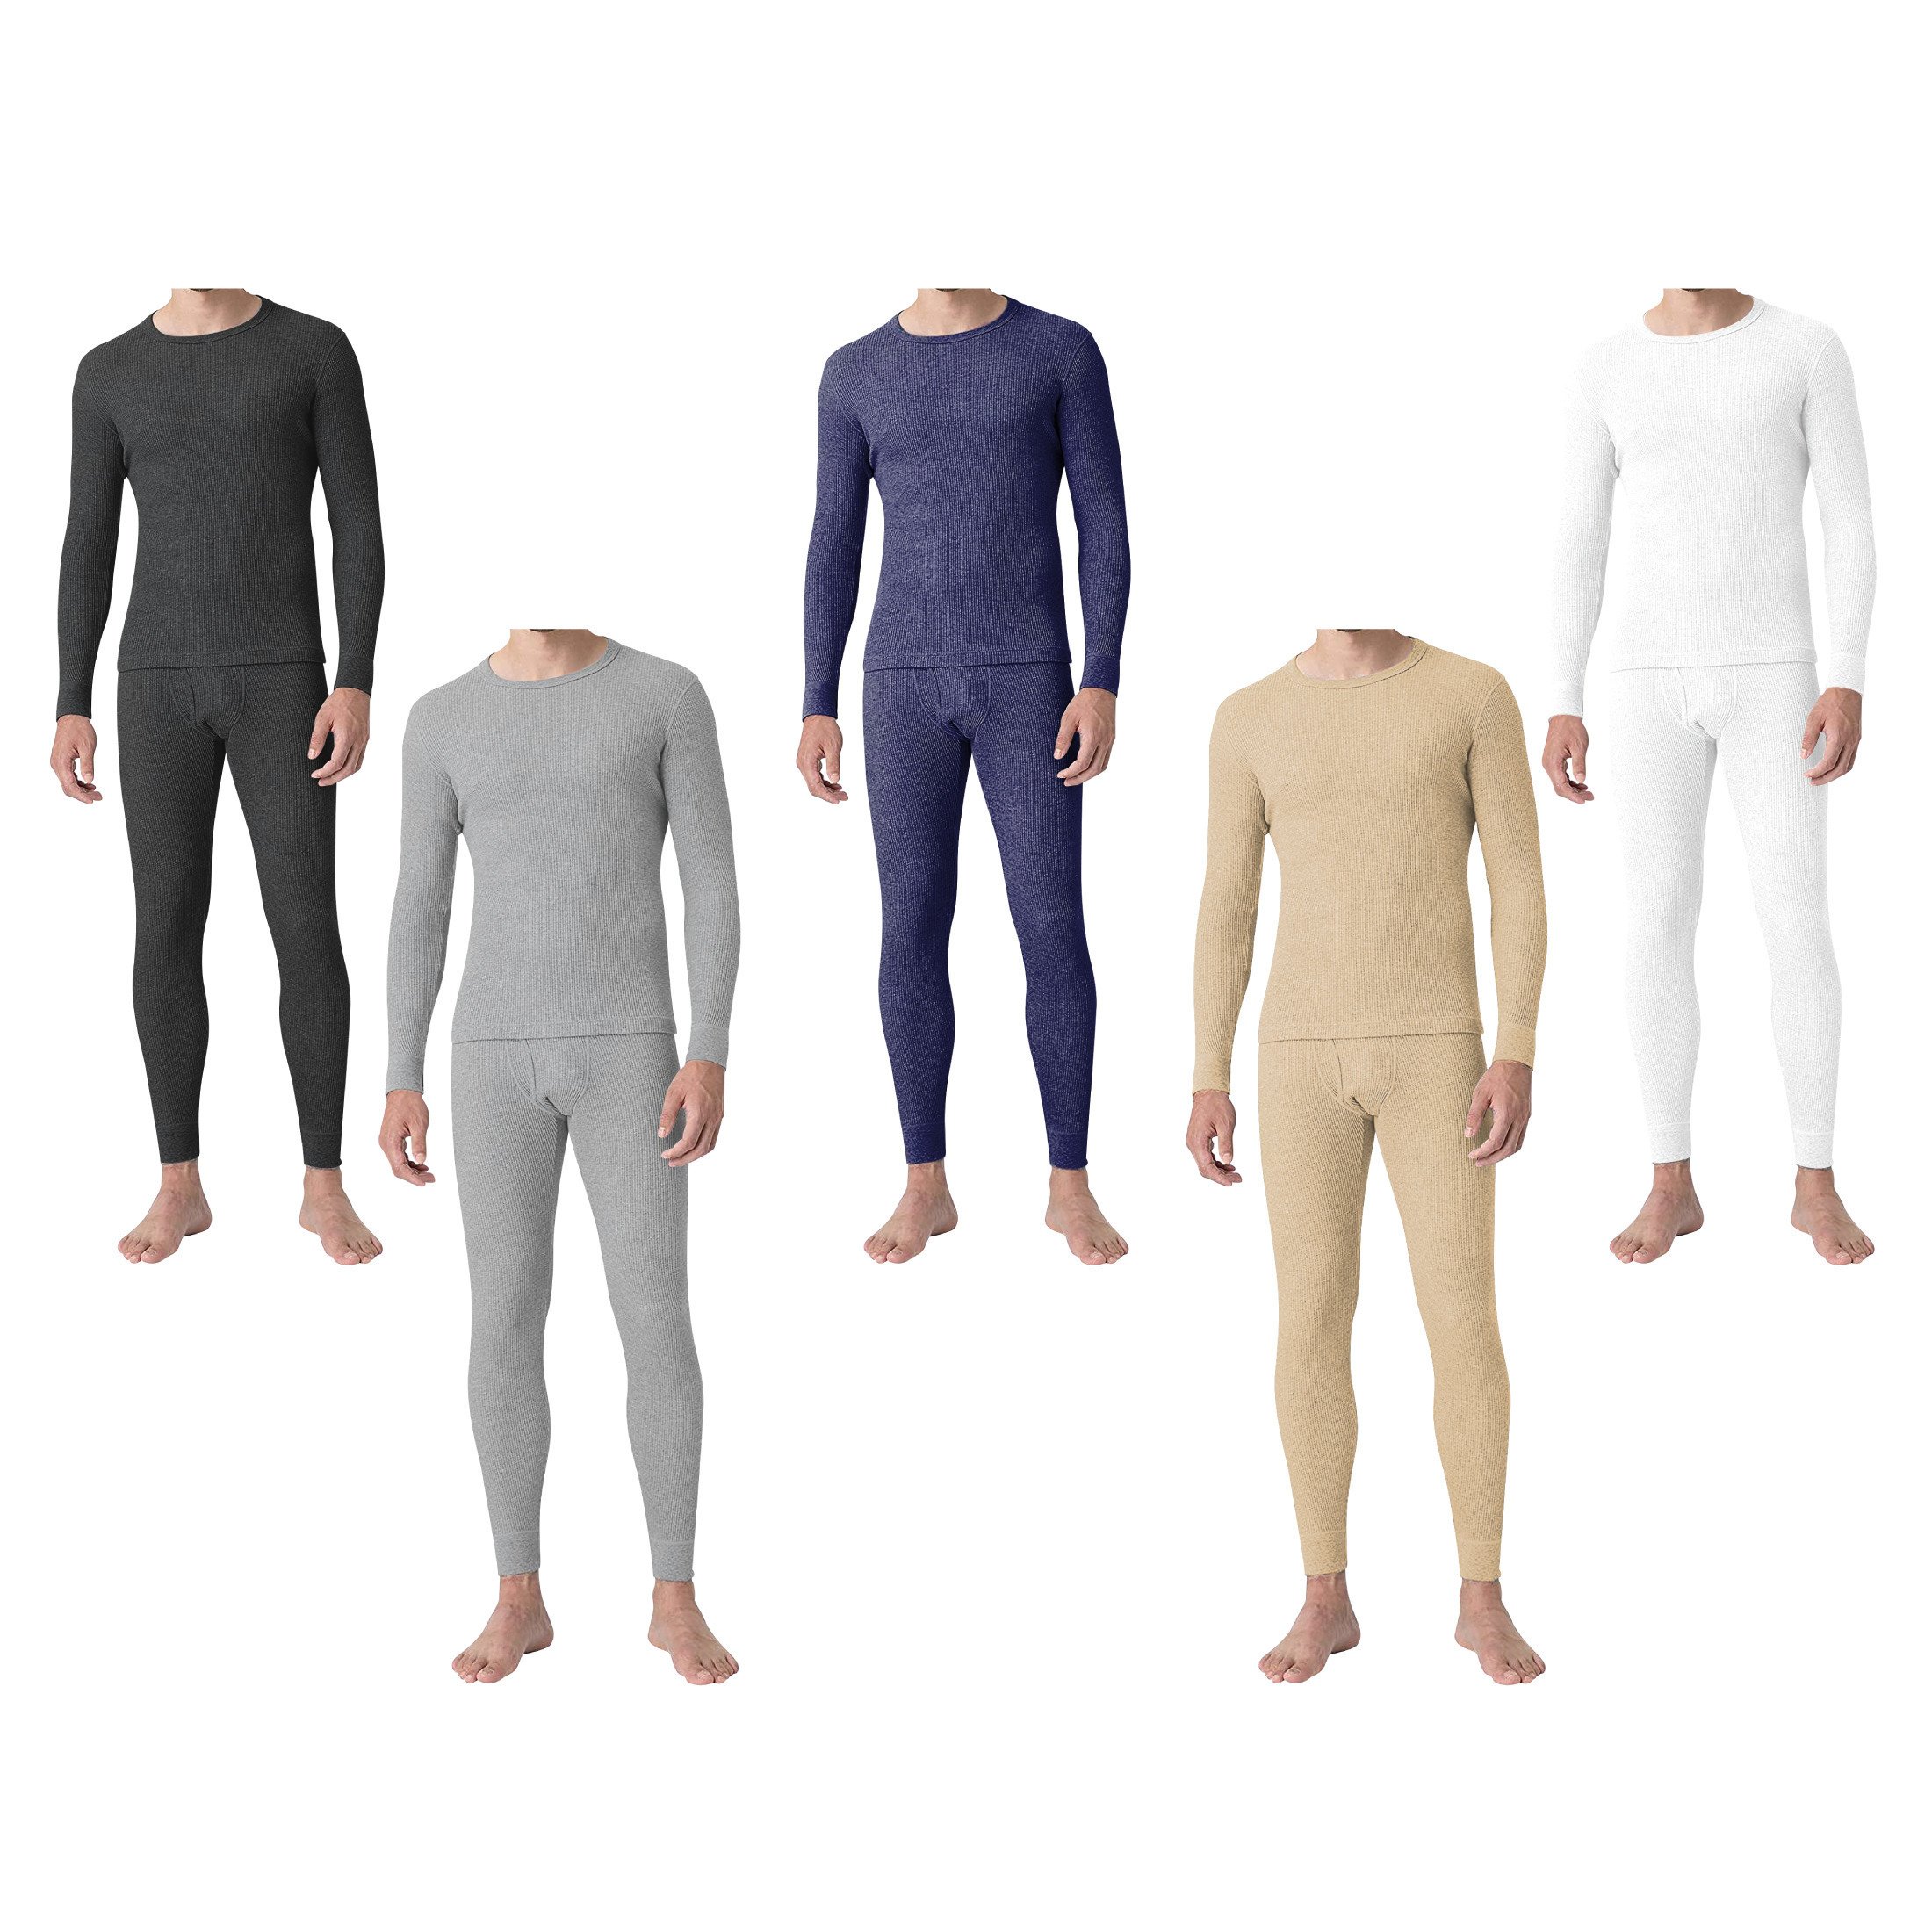 2-Sets: Men's Super Soft Cotton Waffle Knit Winter Thermal Underwear Set - Black & Grey, Medium